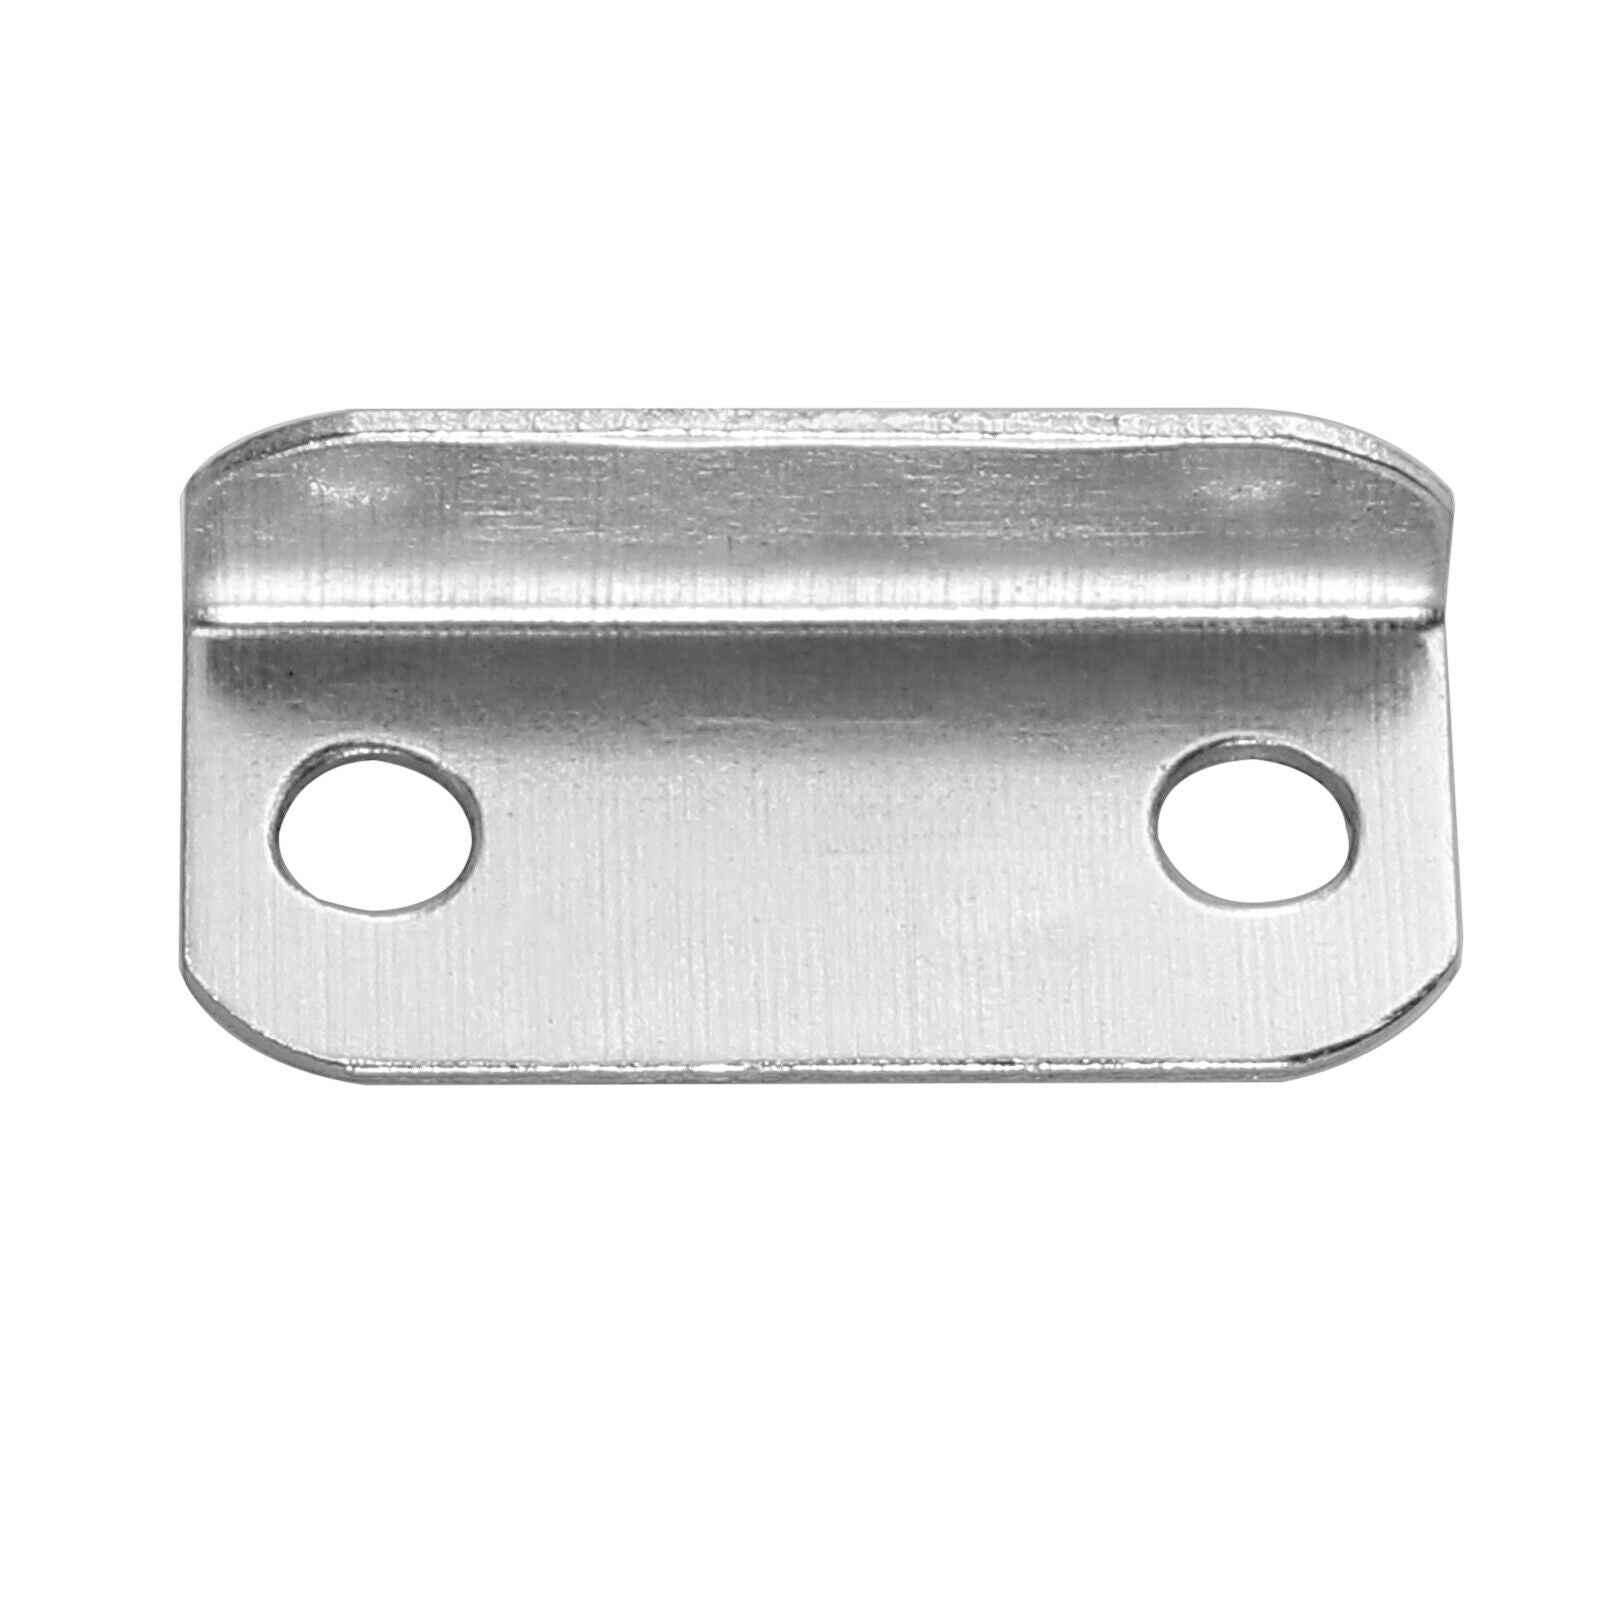 1Pieces of 2 Keys Cylindrical Cam Key Lock Tool Cabinet Desk Drawer Lock